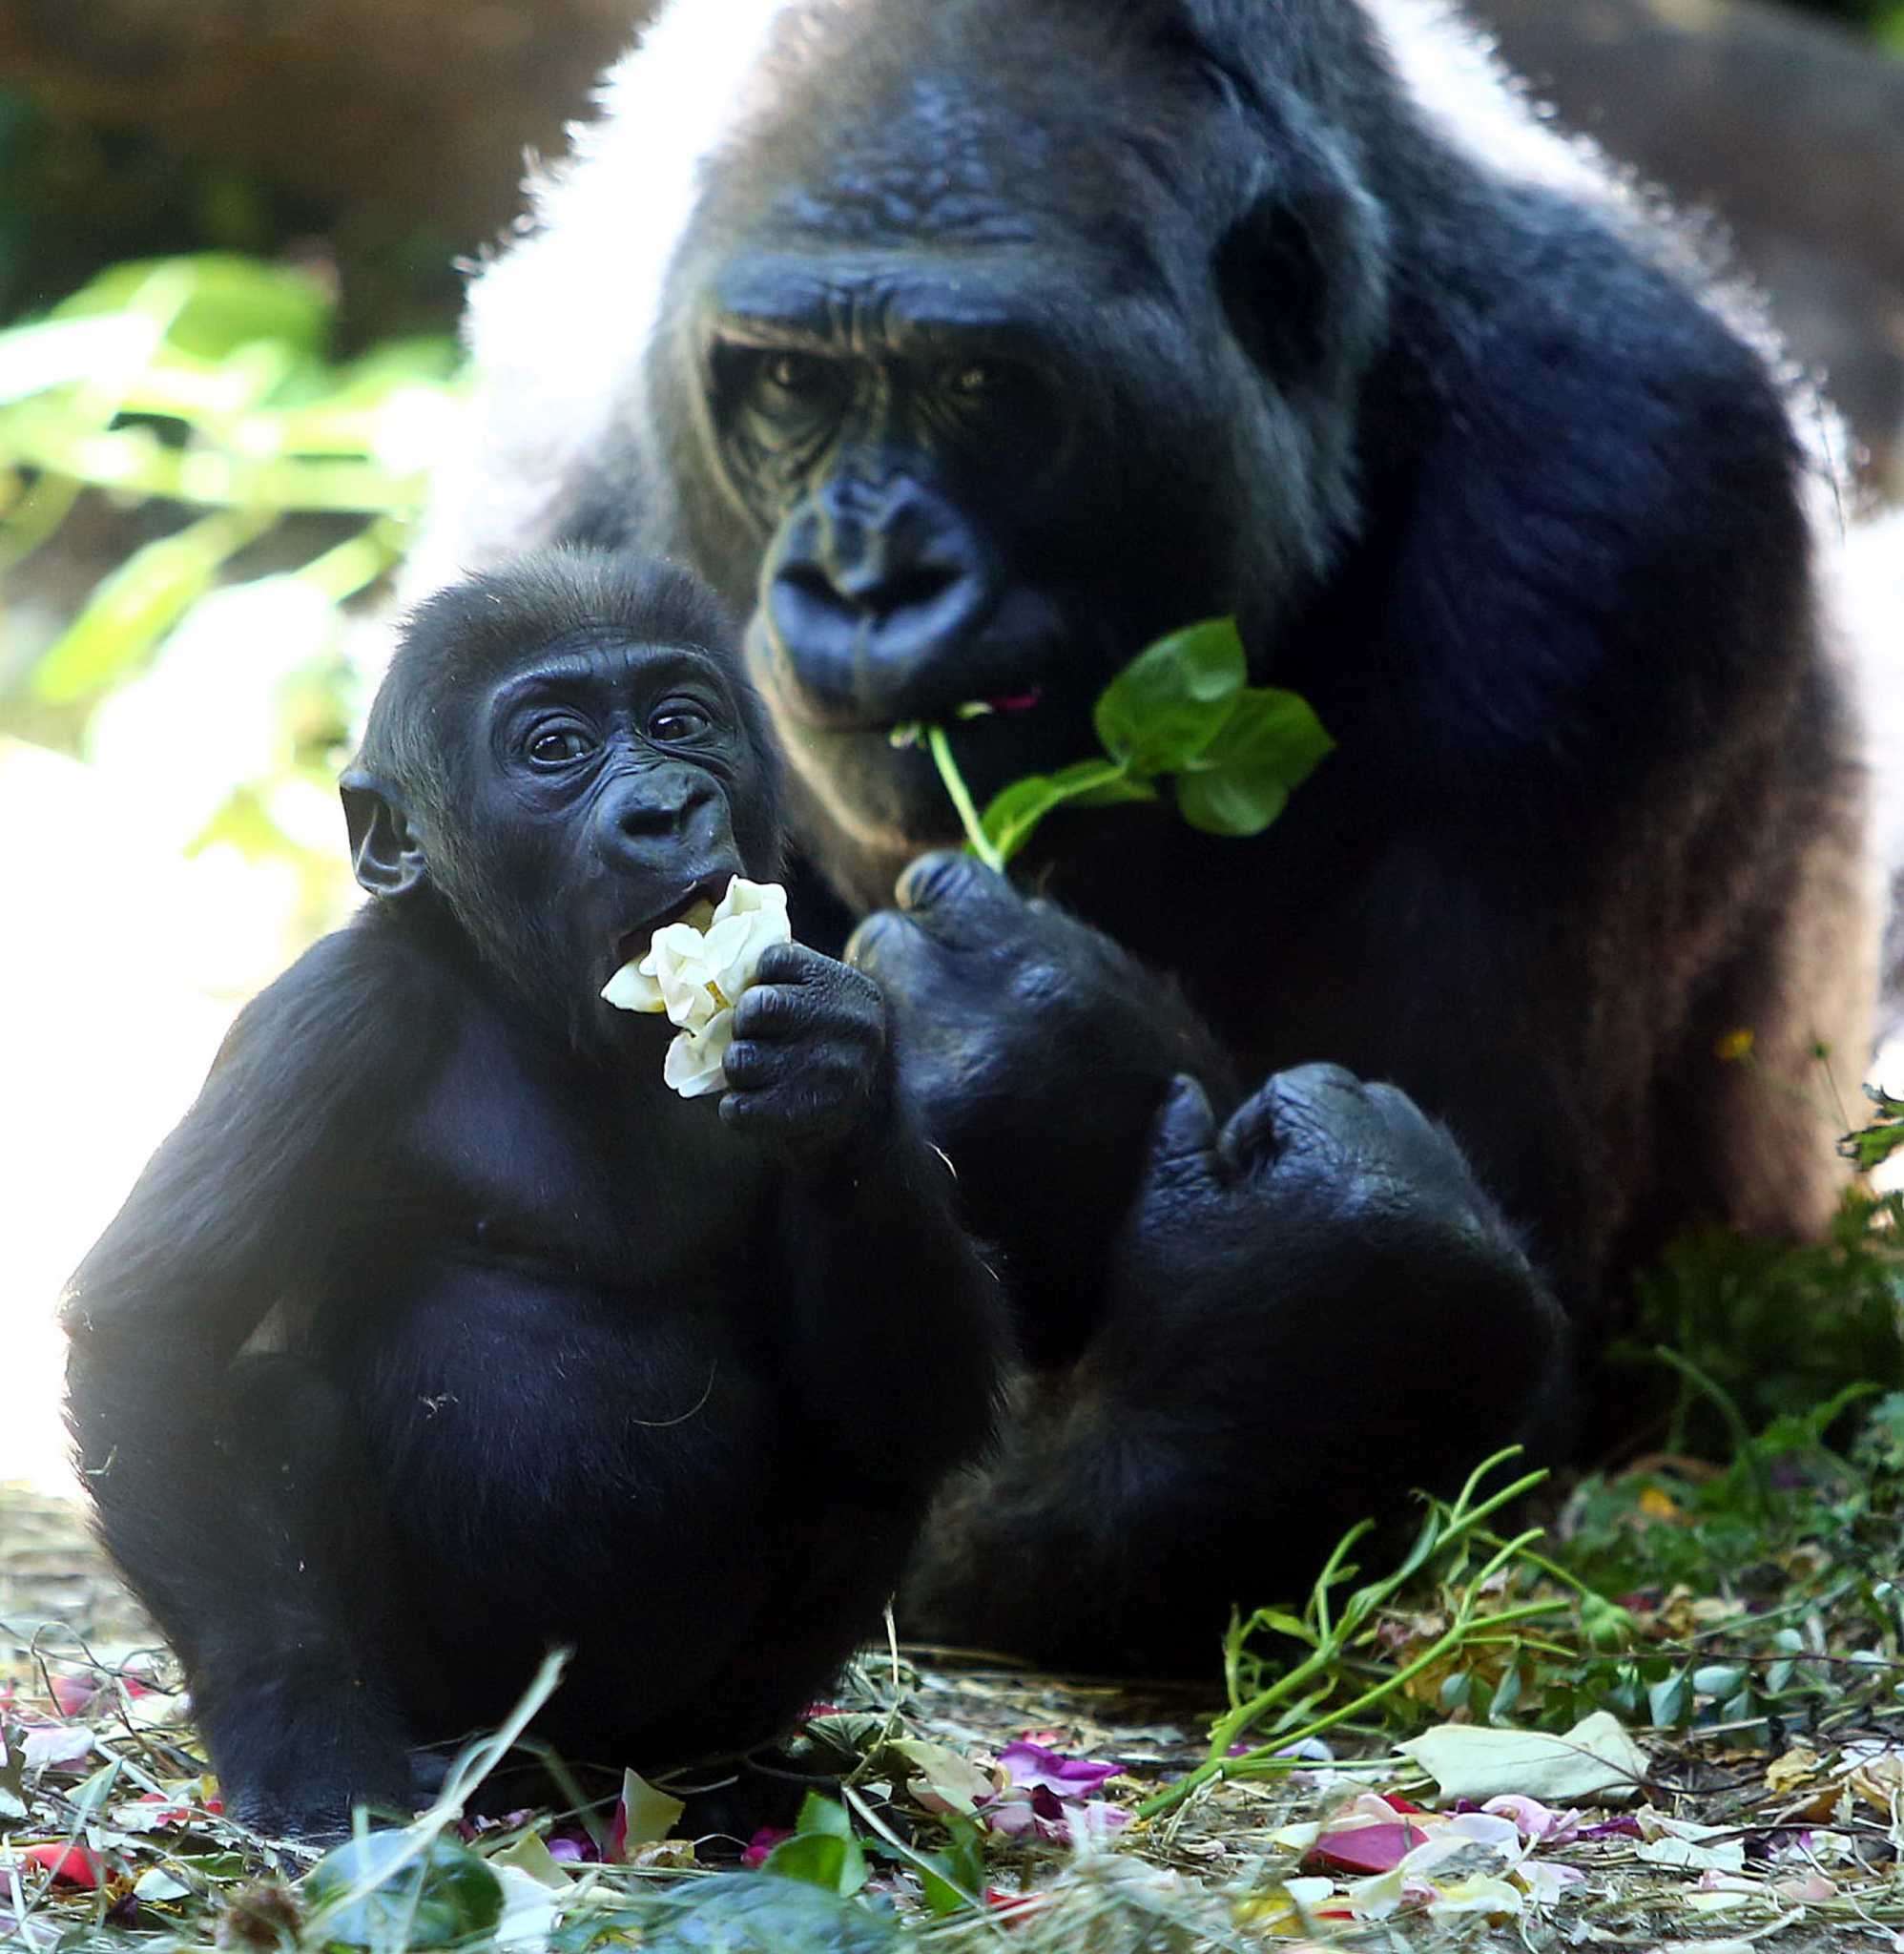  Baby gorilla  Yola makes her public debut